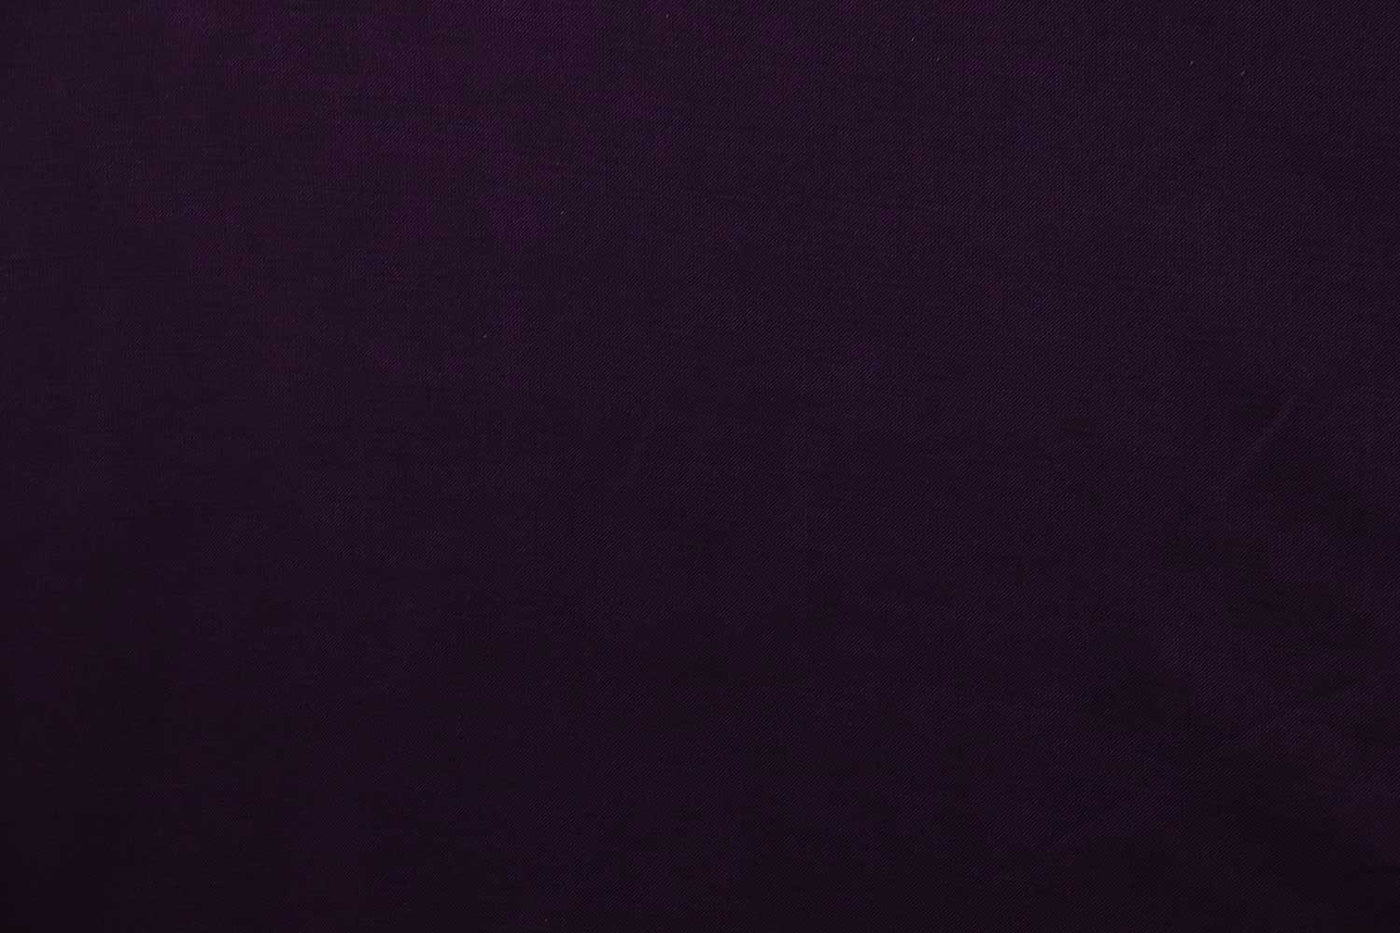 Precut of 1.5 Meters of Dark Purple Plain Viscose Dyed Linen Fabric